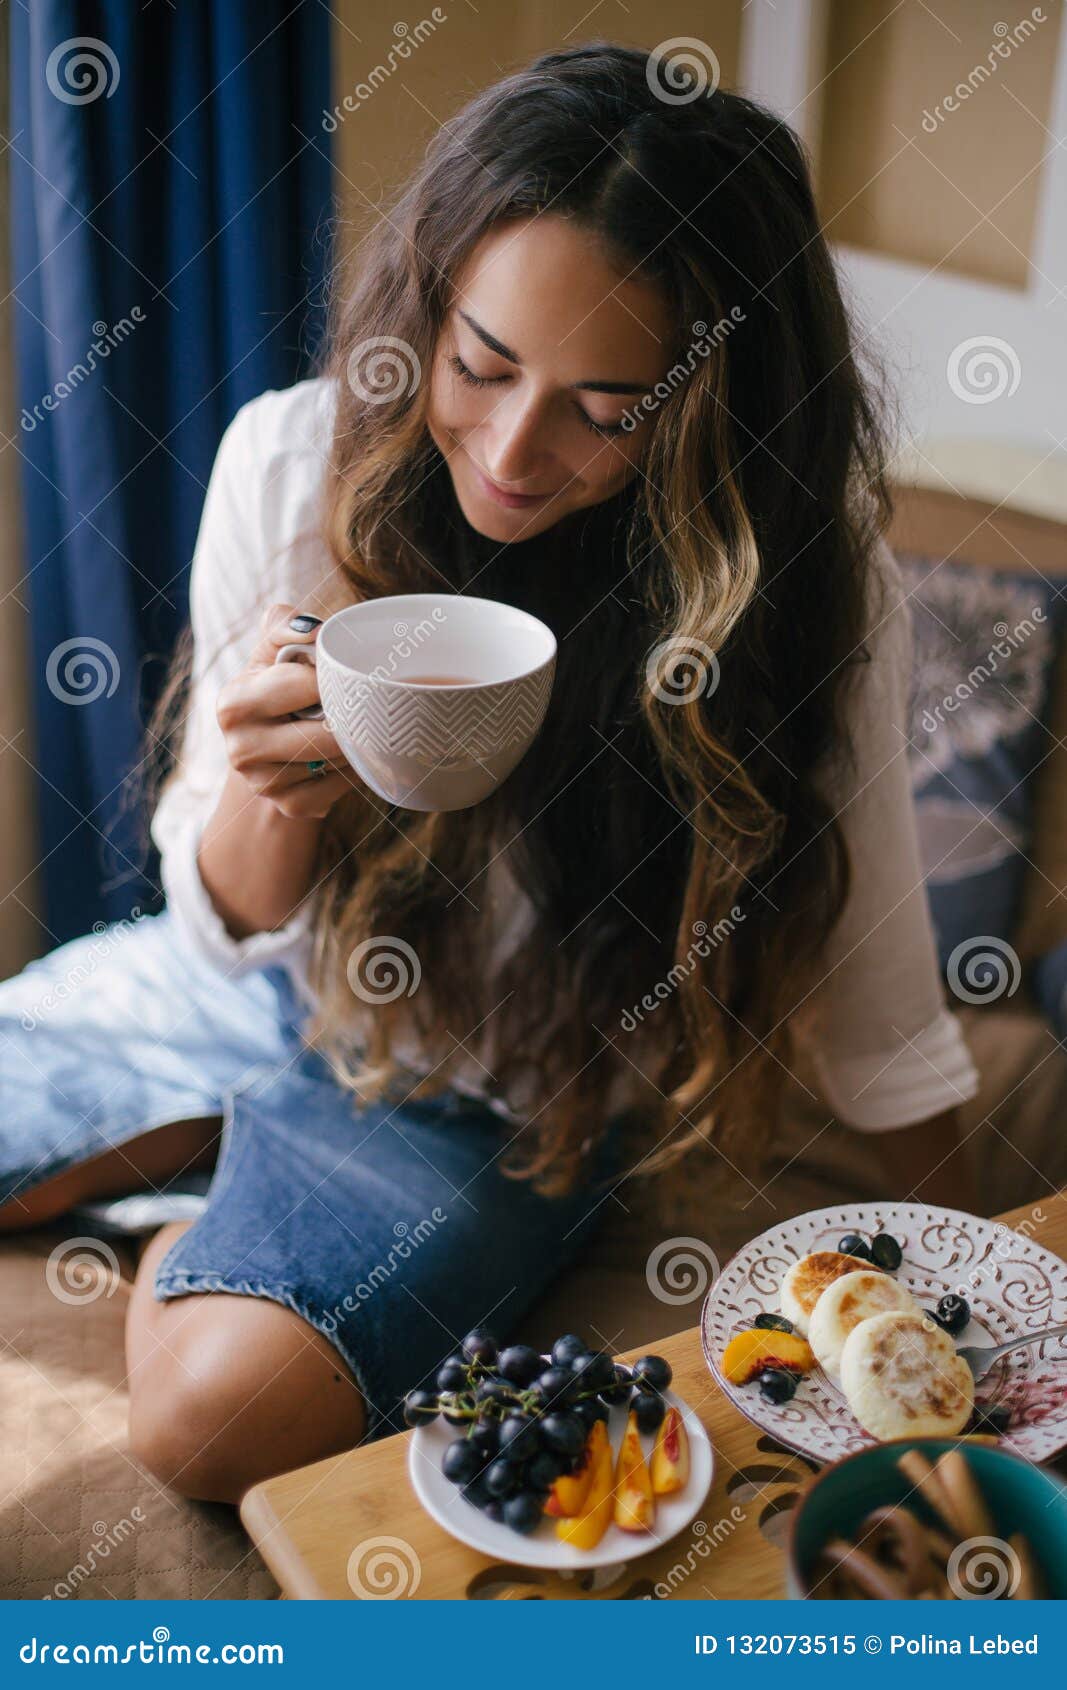 Young Beautiful Woman Enjoying Her Morning Tea Stock Image - Image of ...